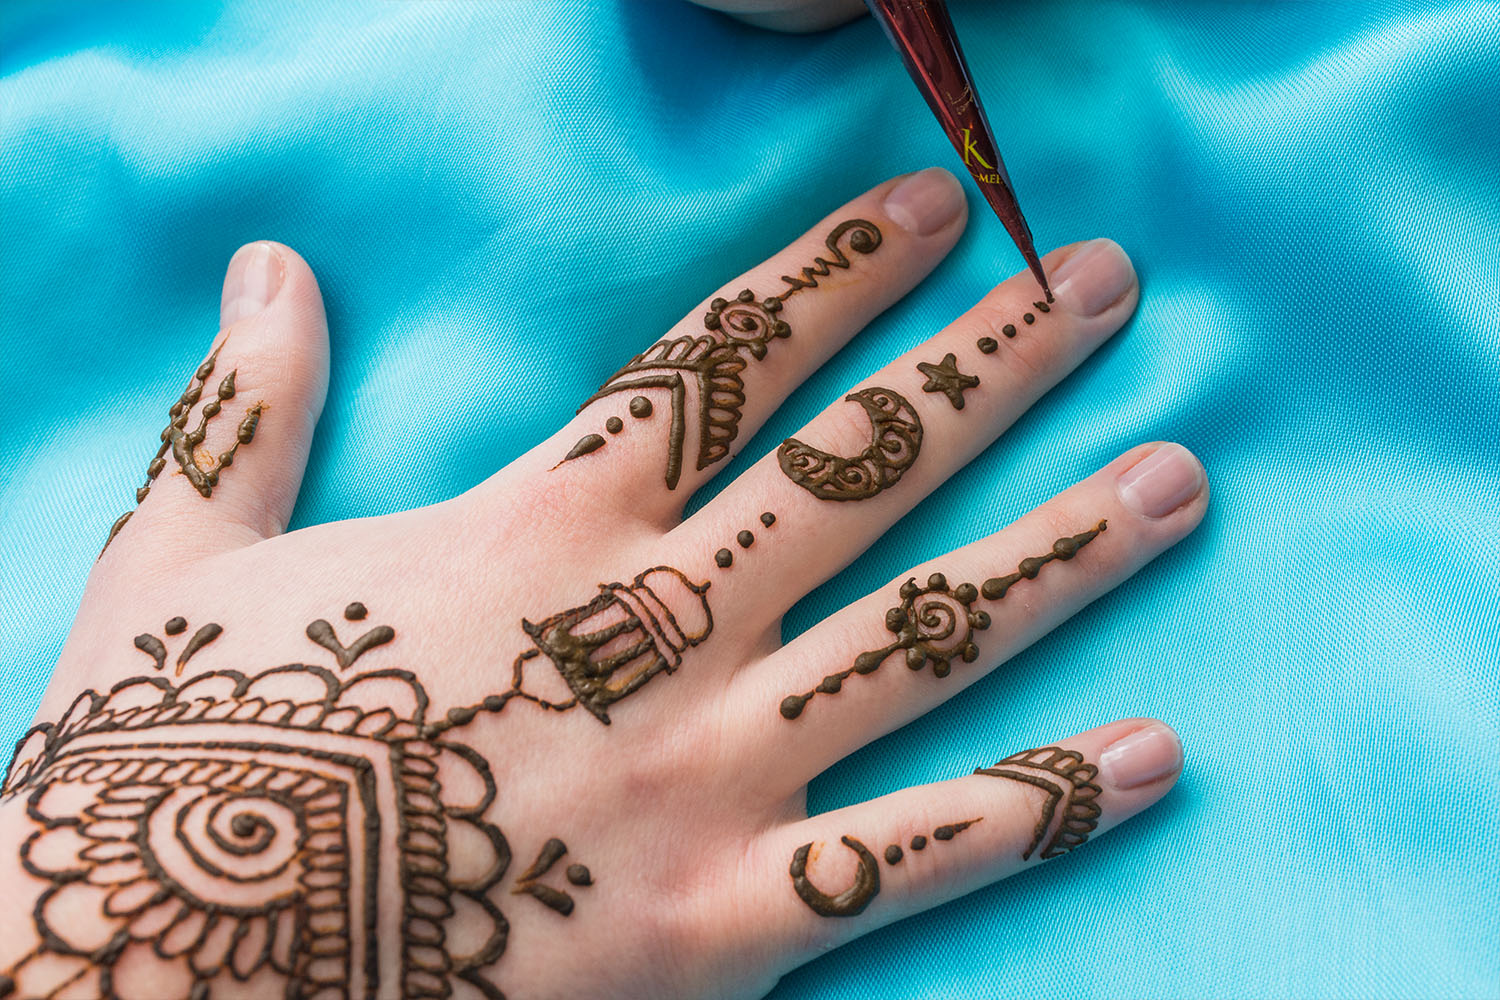 equipment-tattooing-mehndi-draws-near-woman-hand